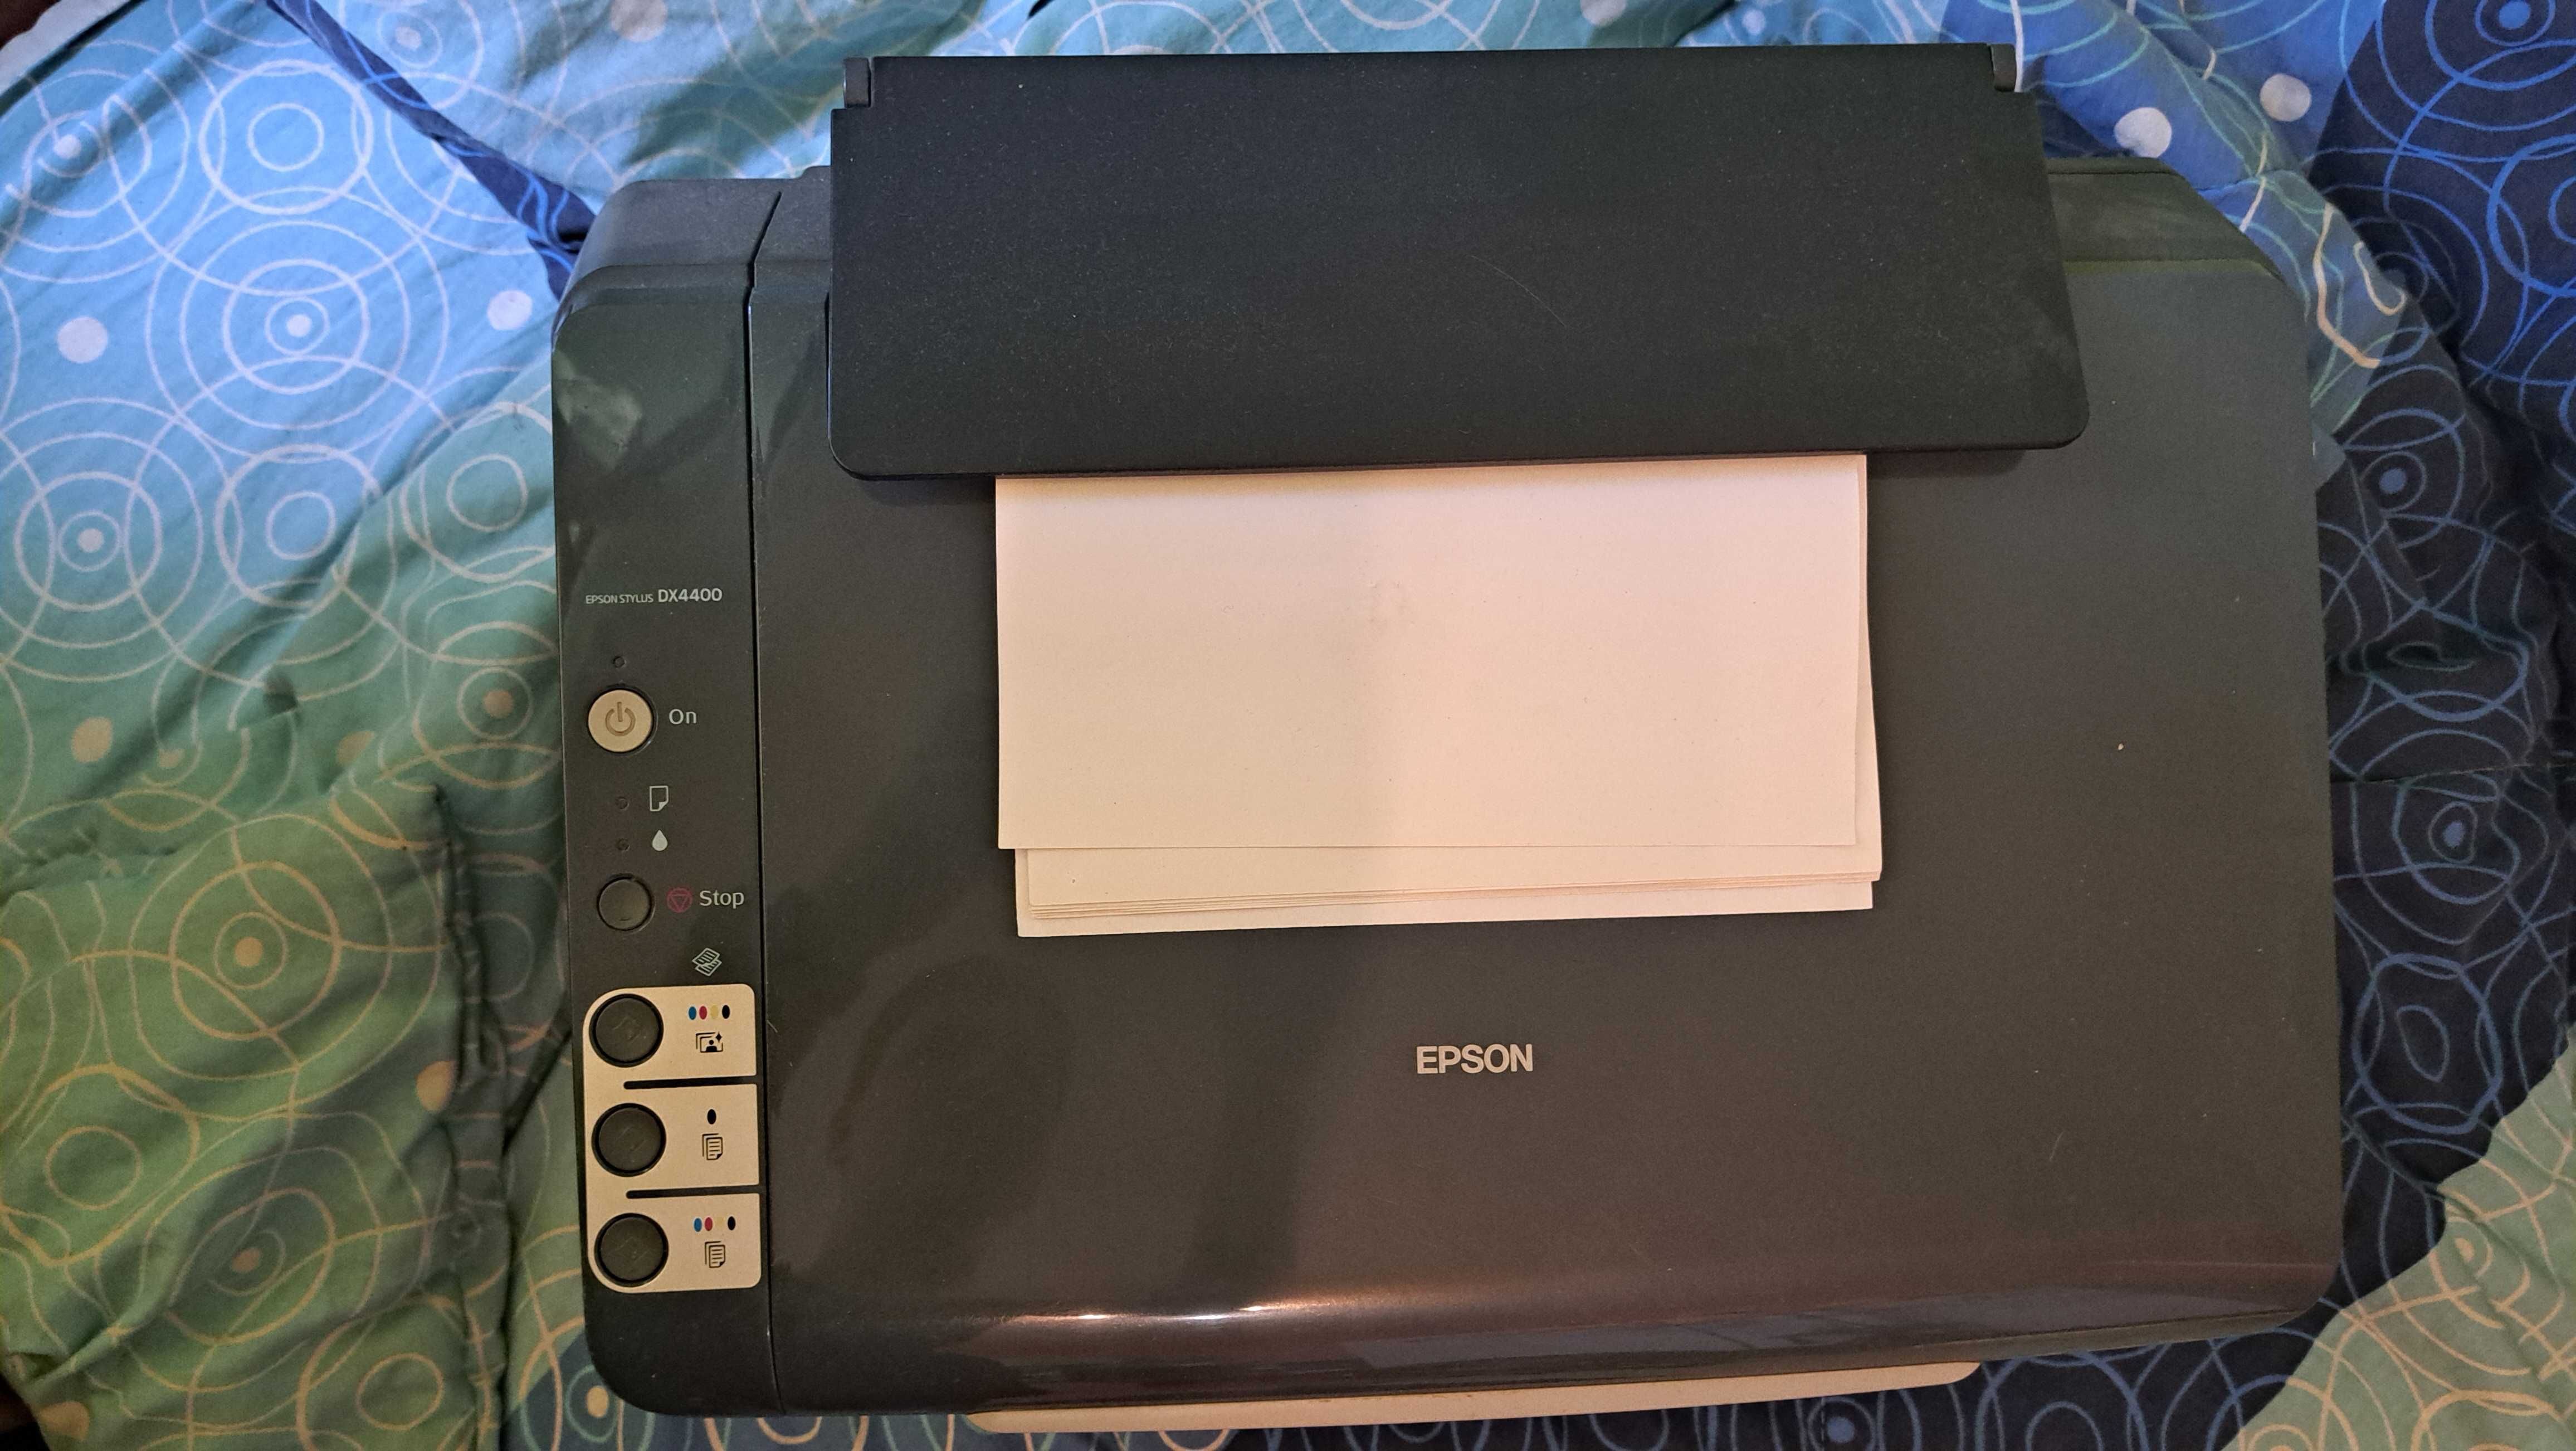 Принтер Epson Stylus DX4400